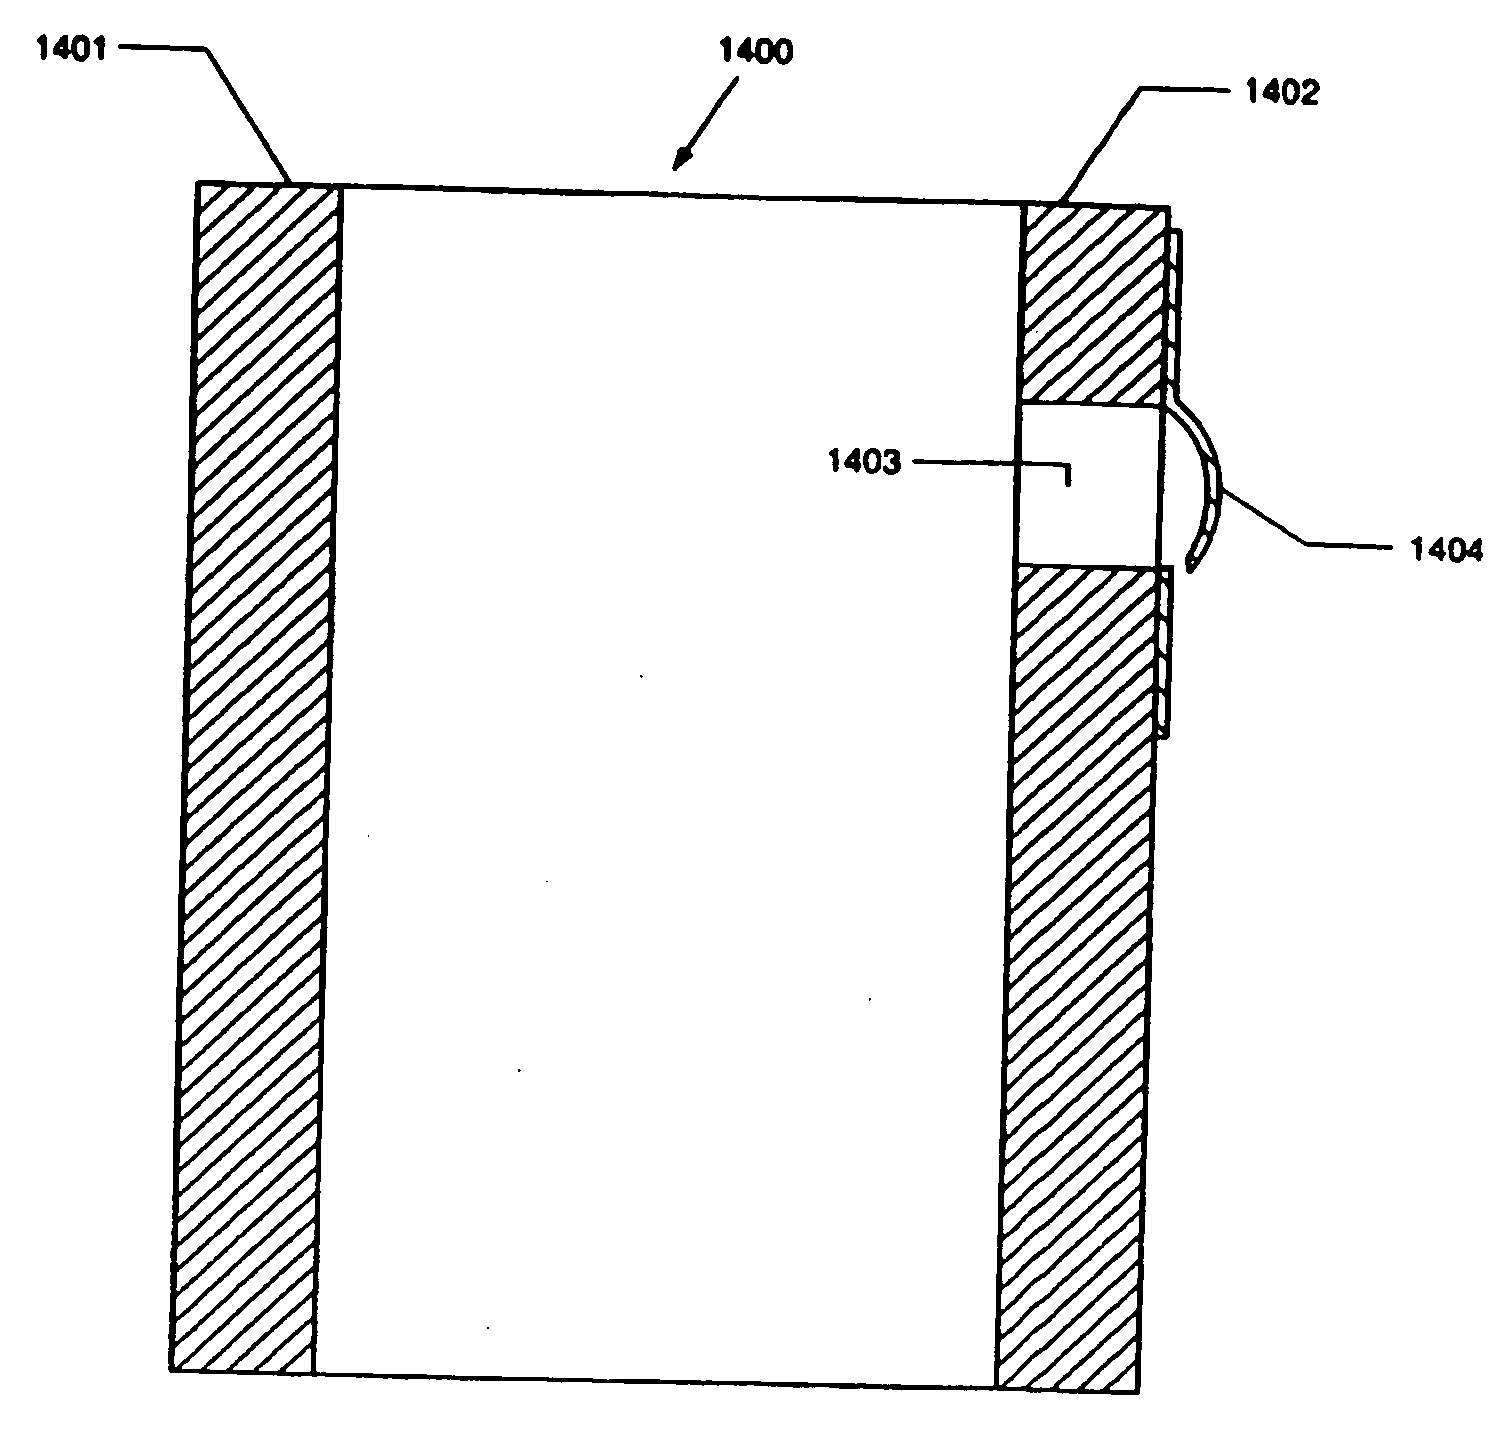 Method of treating a glazing panel